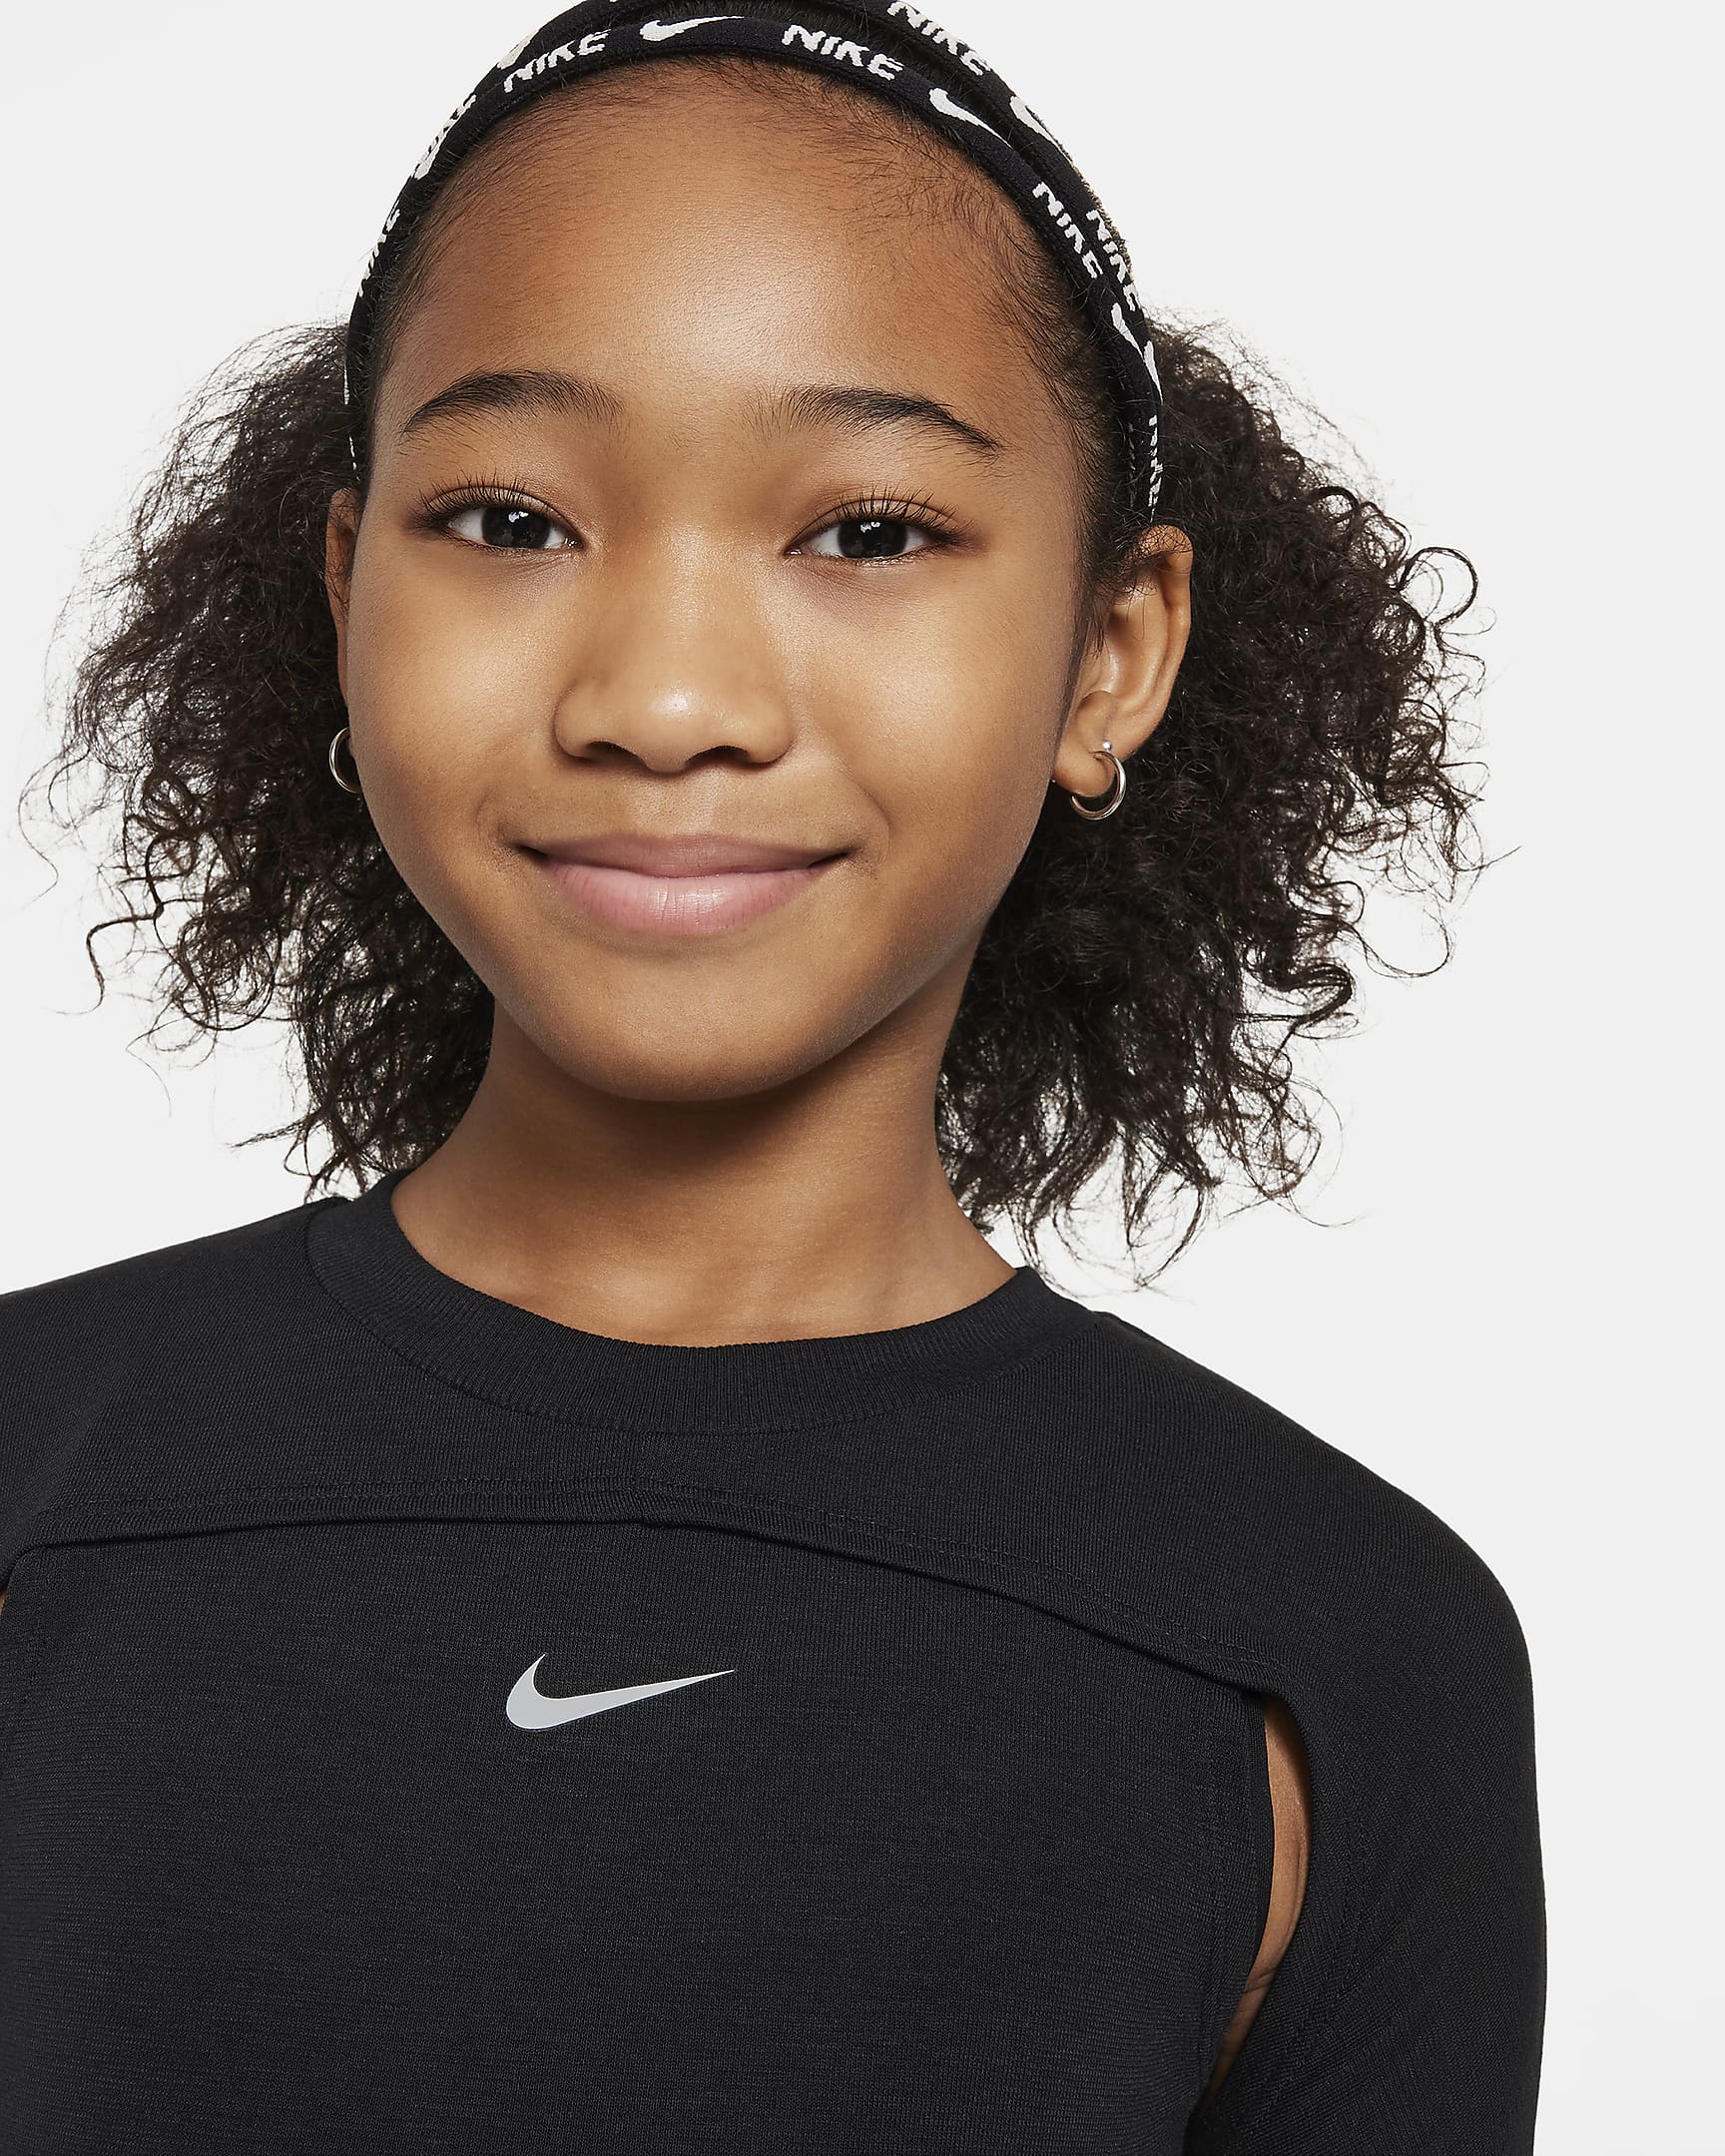 Nike Girls' Dri-FIT Long-Sleeve Top. Nike IN